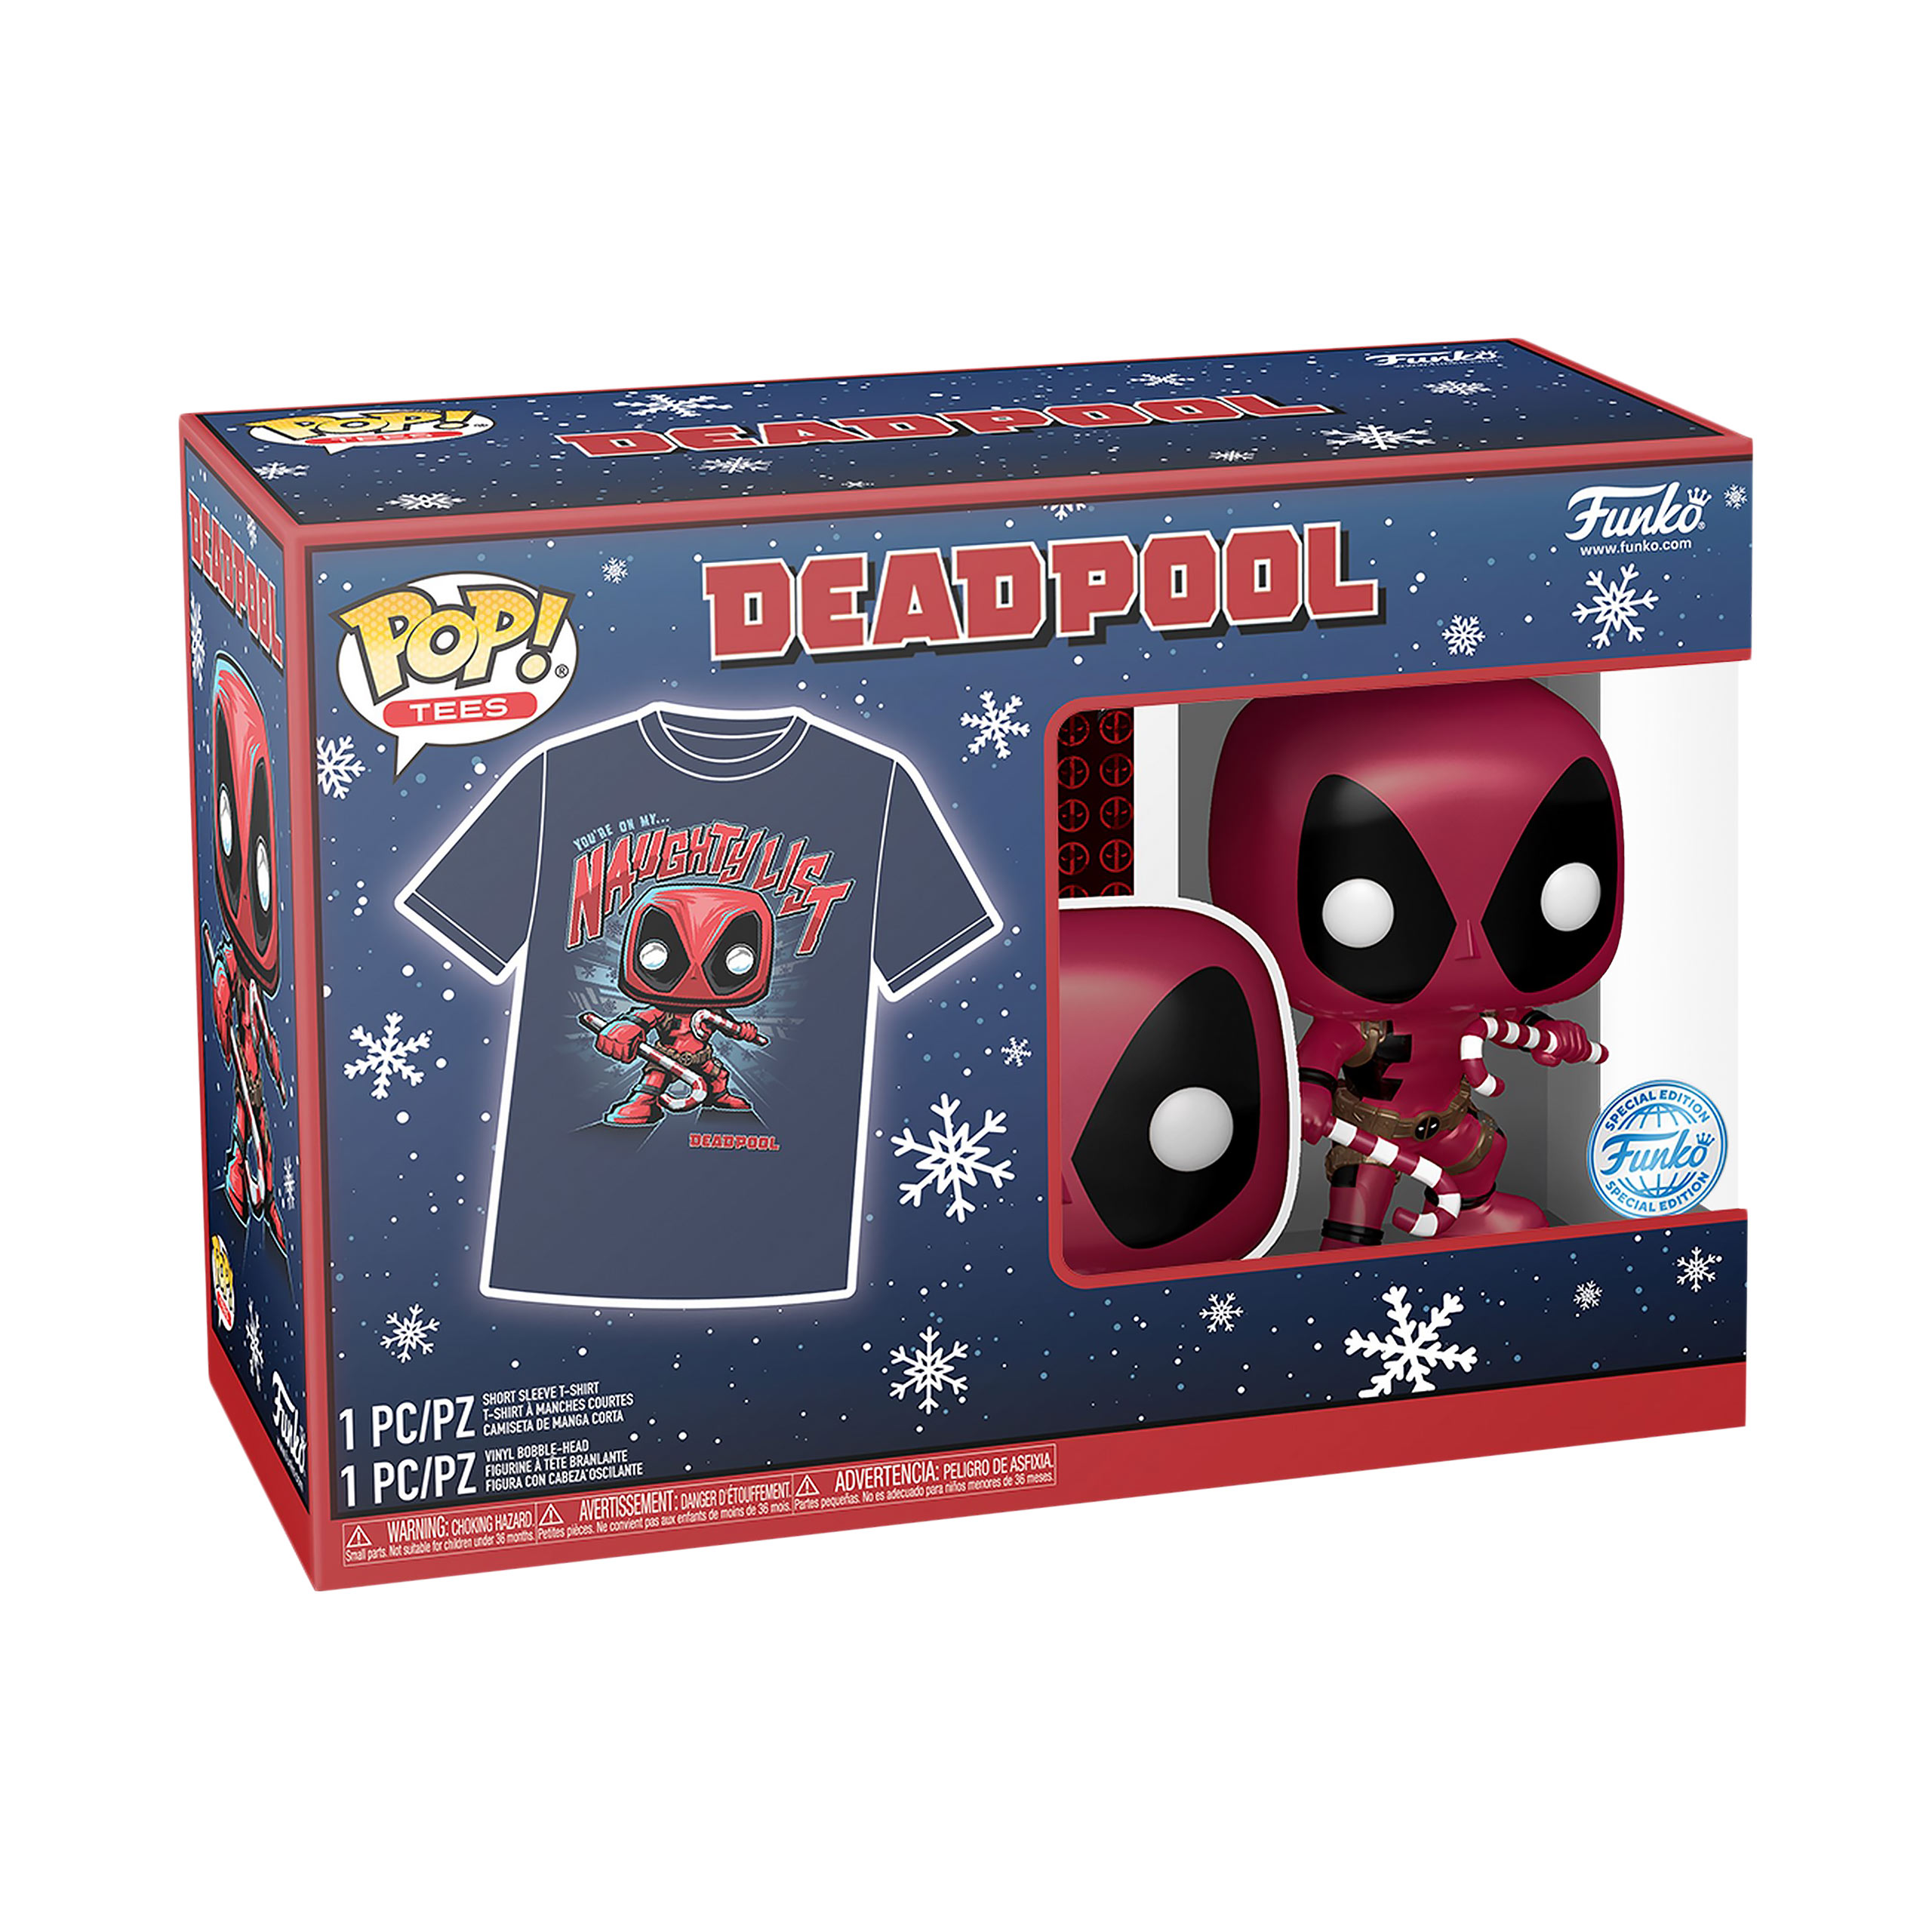 Deadpool Christmas T-Shirt with Funko Pop Figure